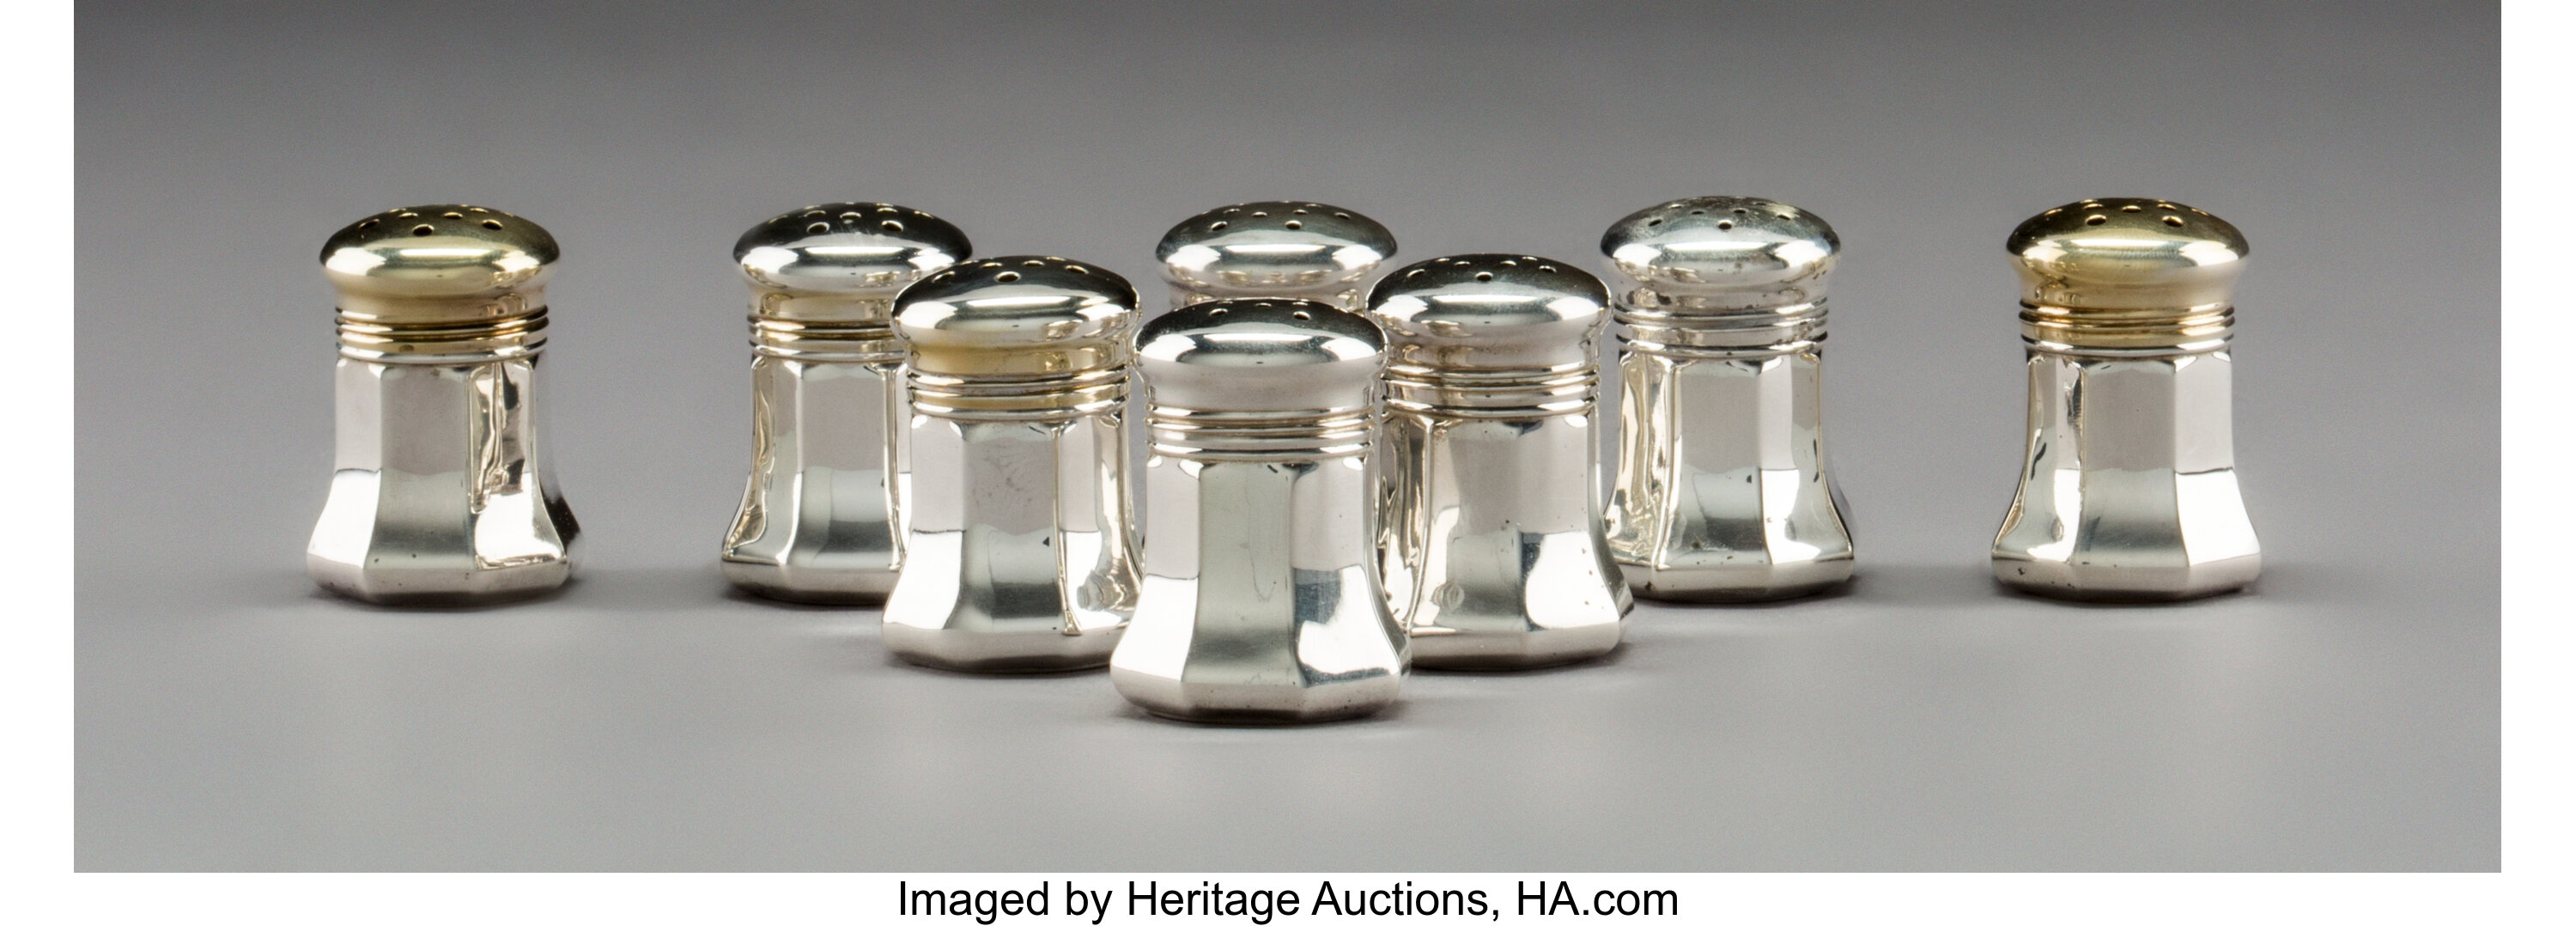 Heritage Silver Salt & Pepper Shakers